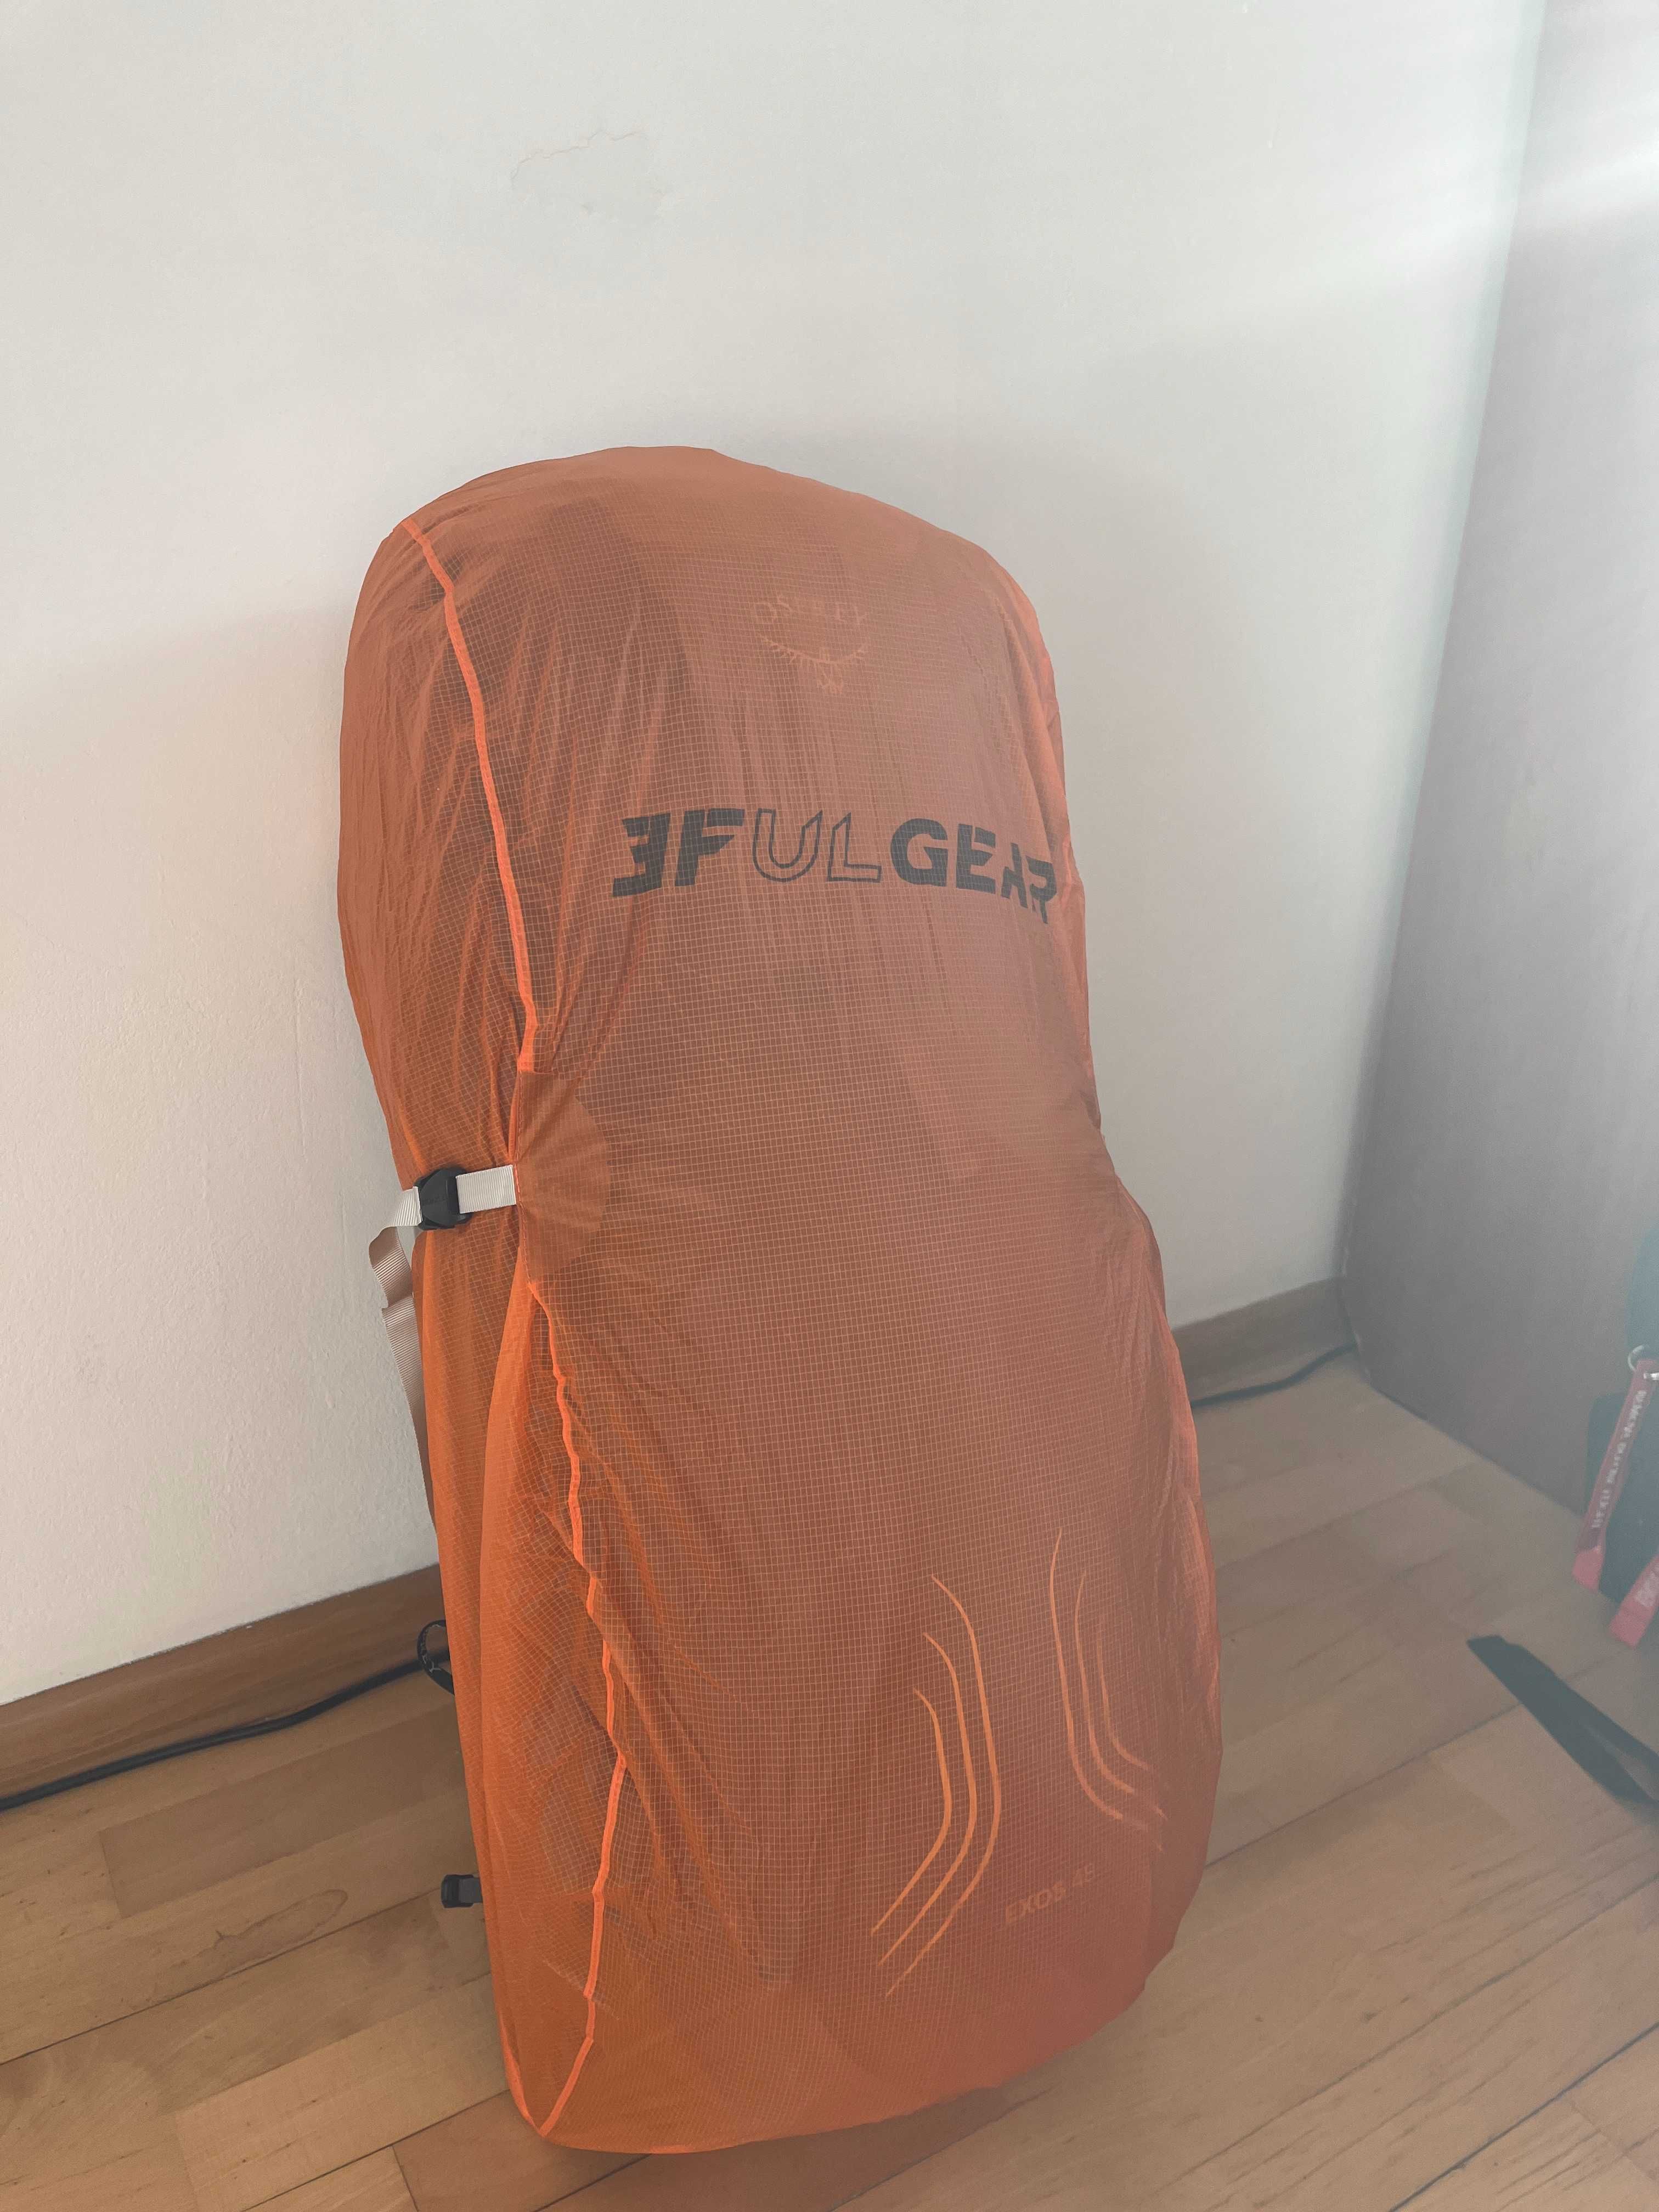 Дождевой чехол для рюкзака (Rain cover) 3F UL Gear